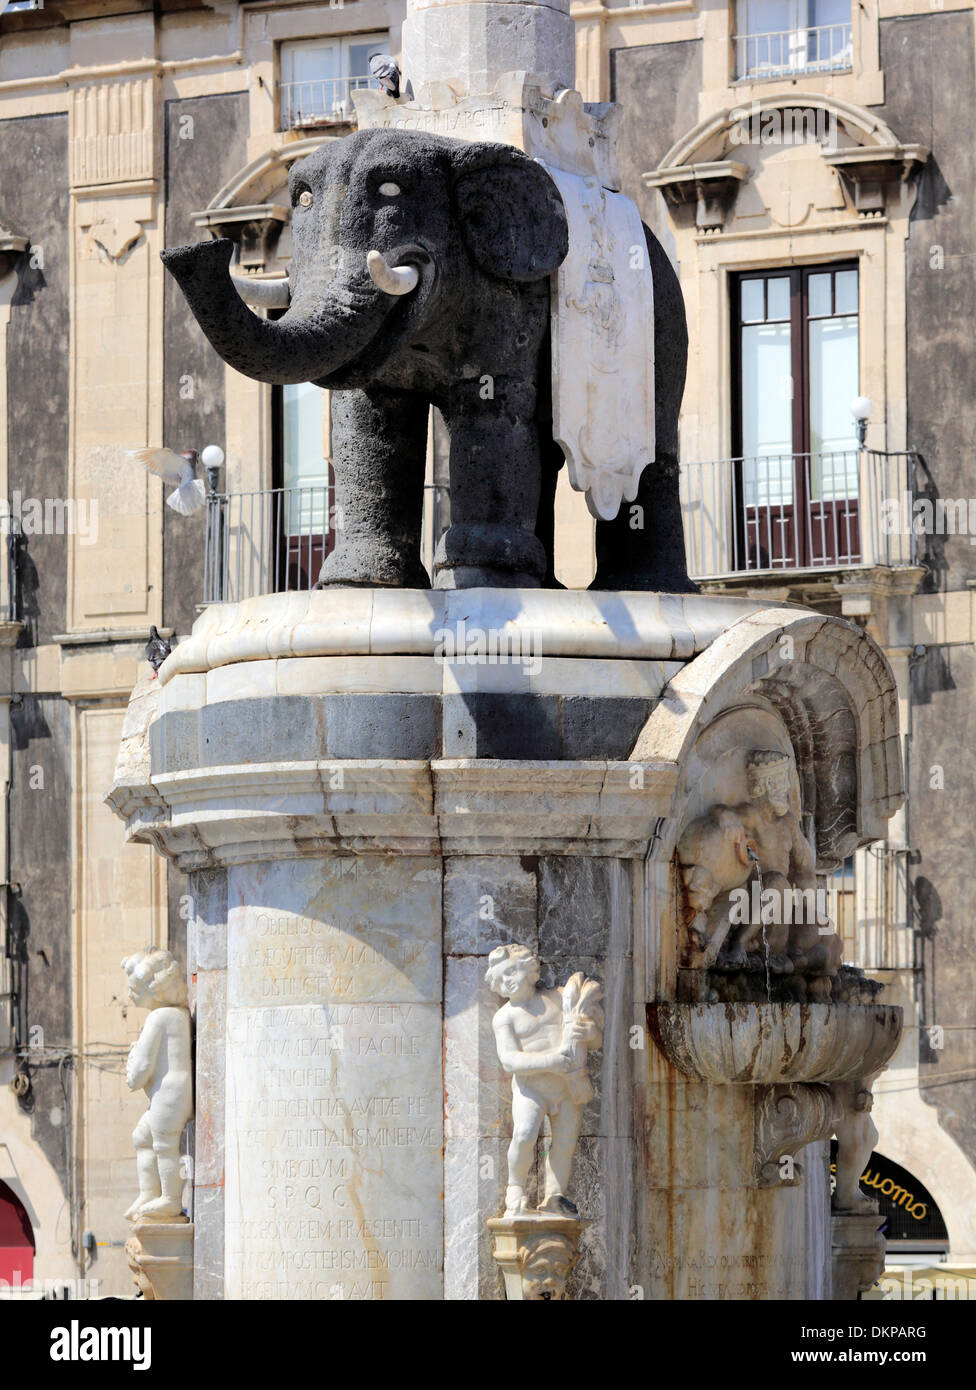 u Liotru, symbol of the city, Catania, Sicily, Italy Stock Photo